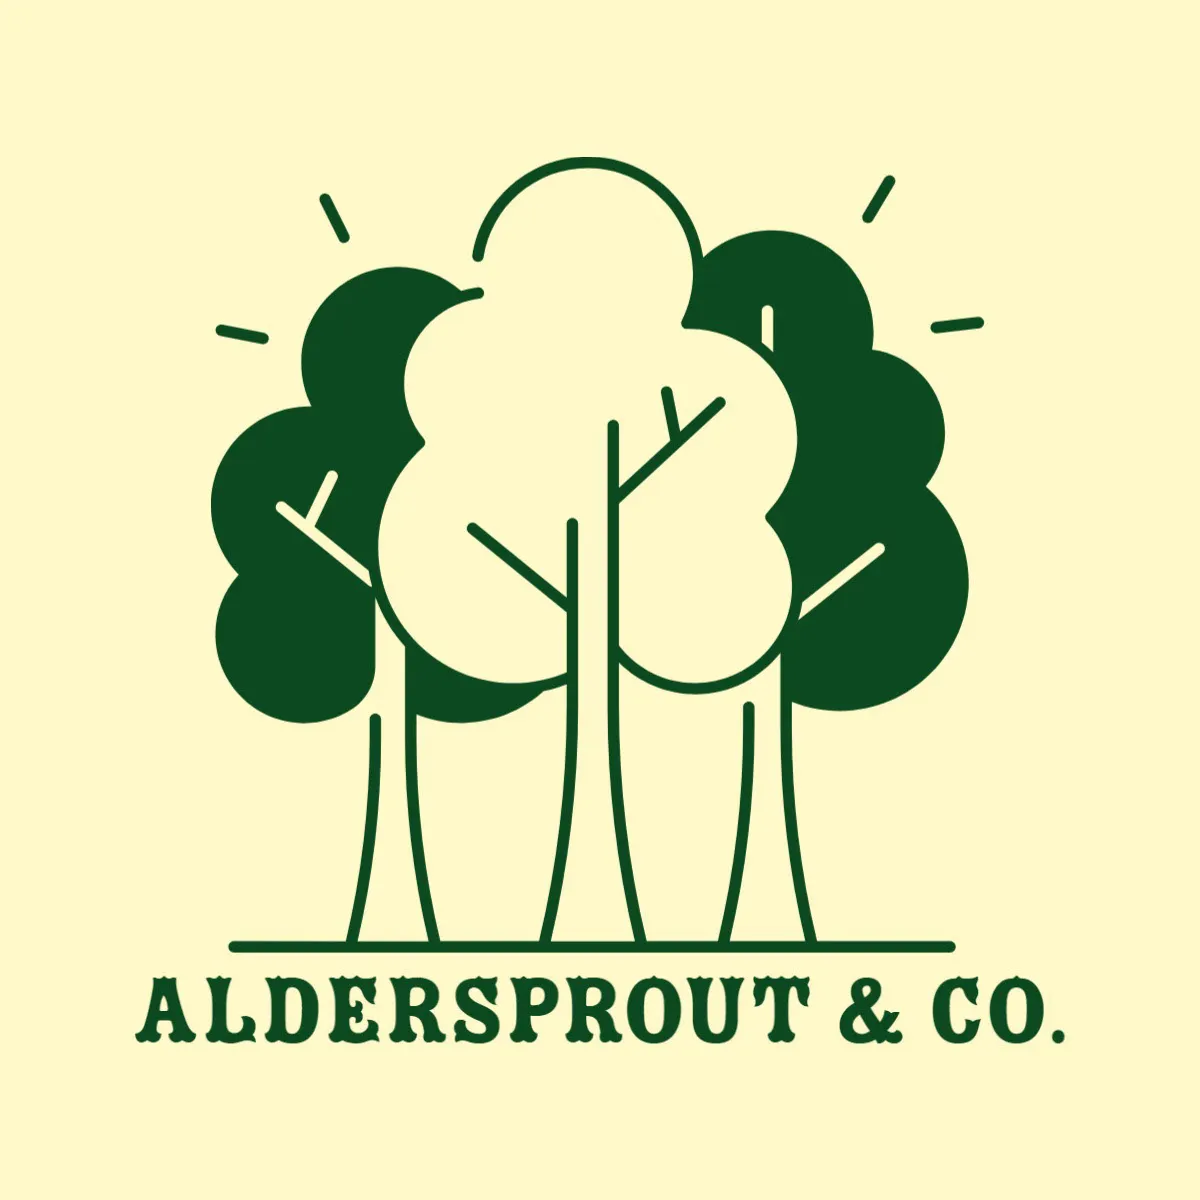 Cream & Green Tree Logo 